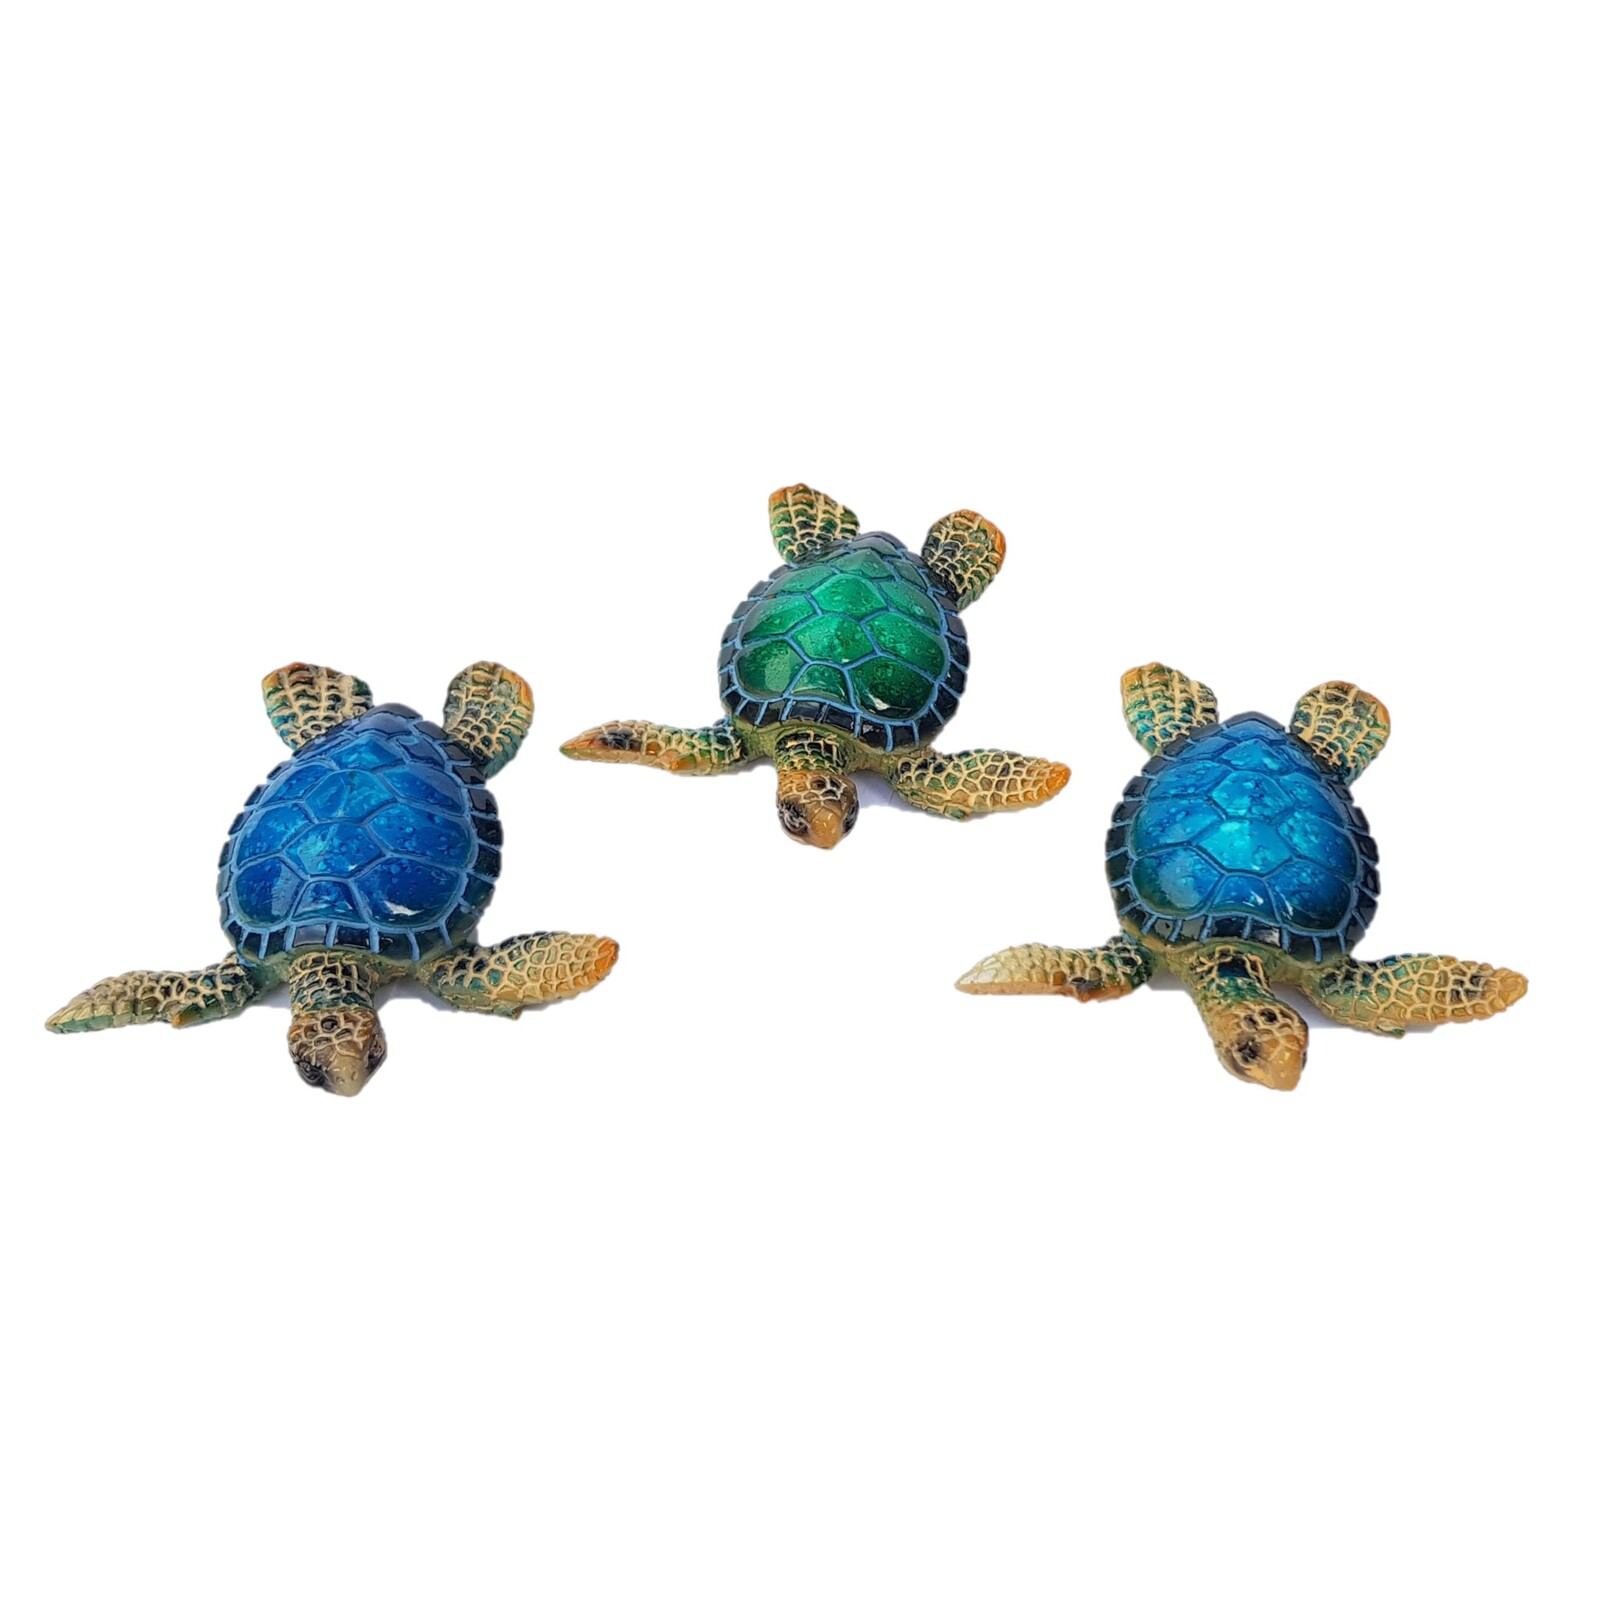 High Detail Beach Themed Design 1pce 7.5cm Realistic Miniature Marble Turtle 